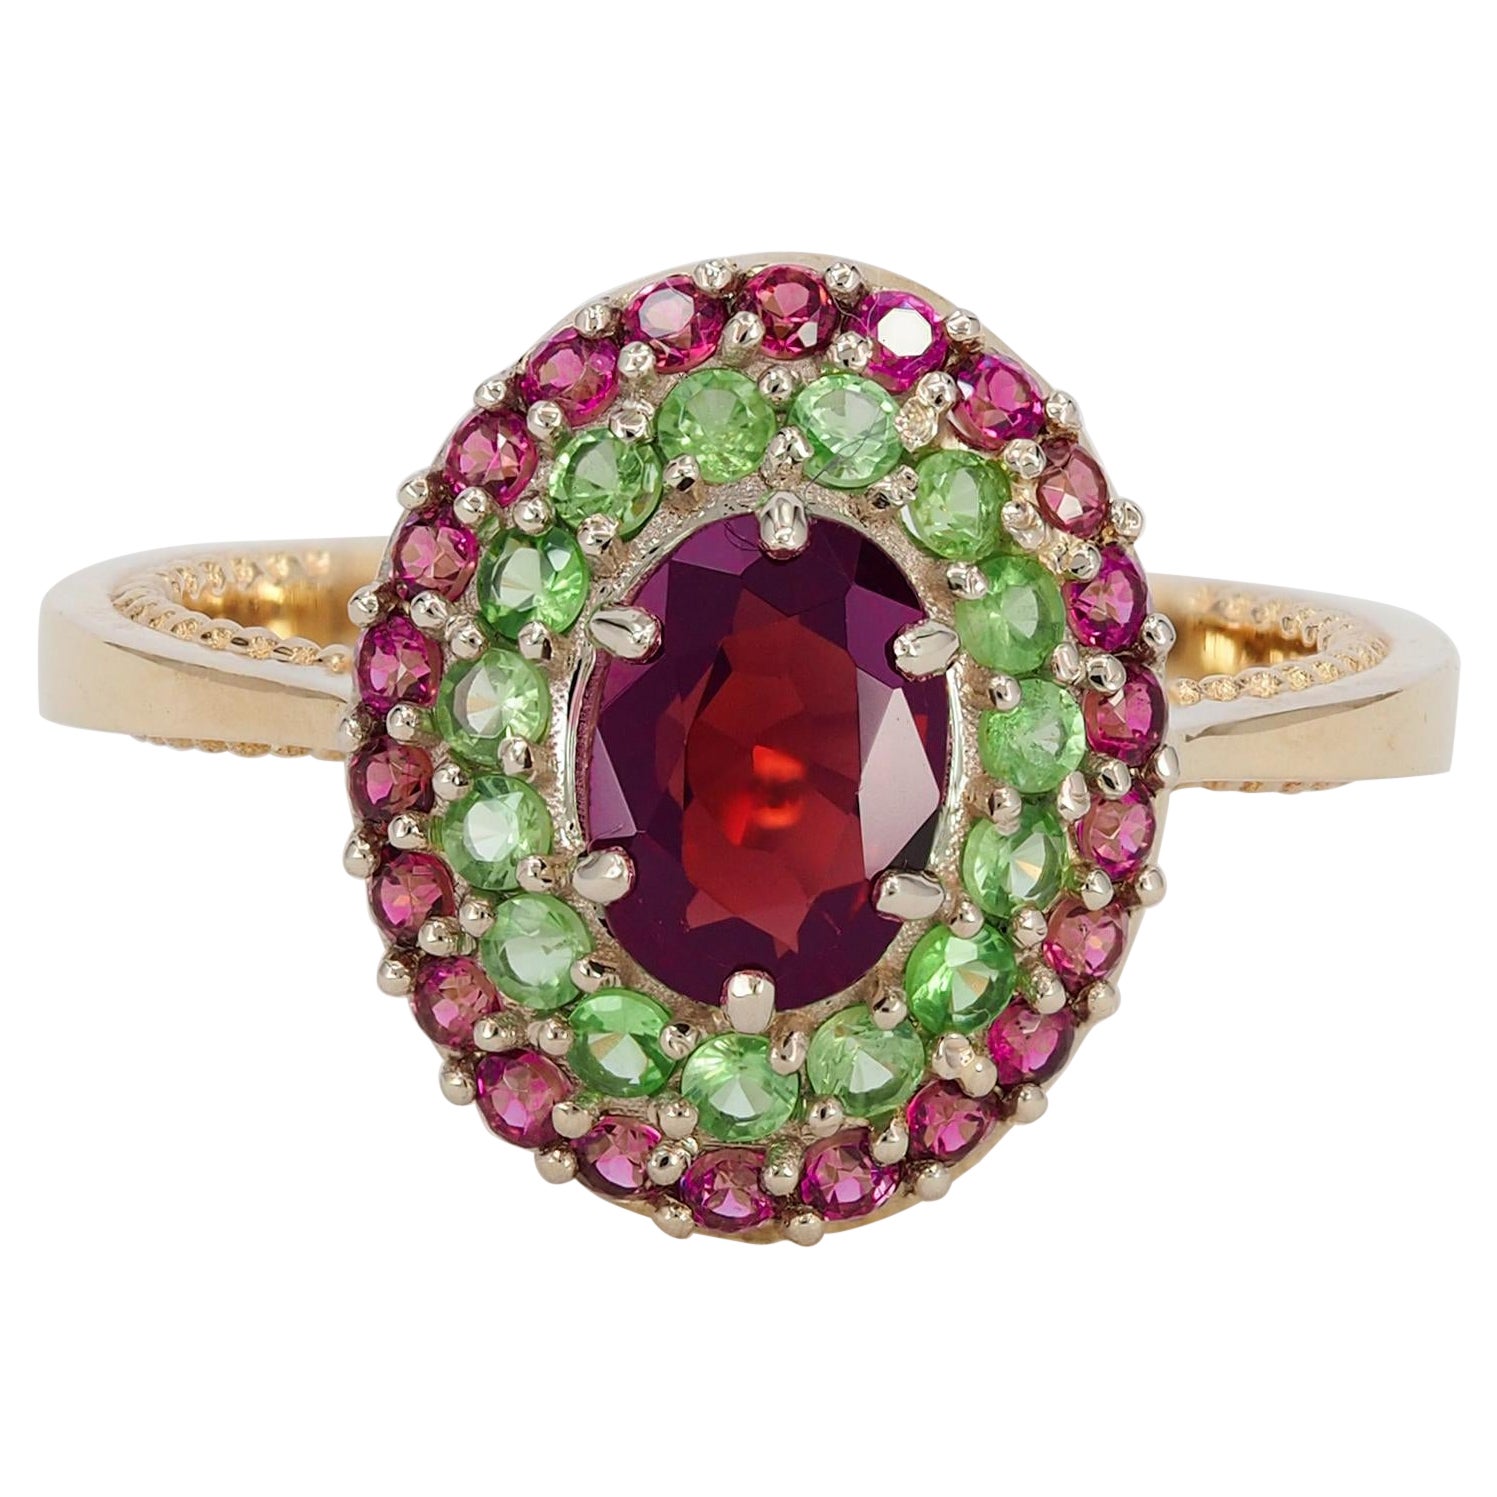 Garnet ring with side tsavorites and rubies.